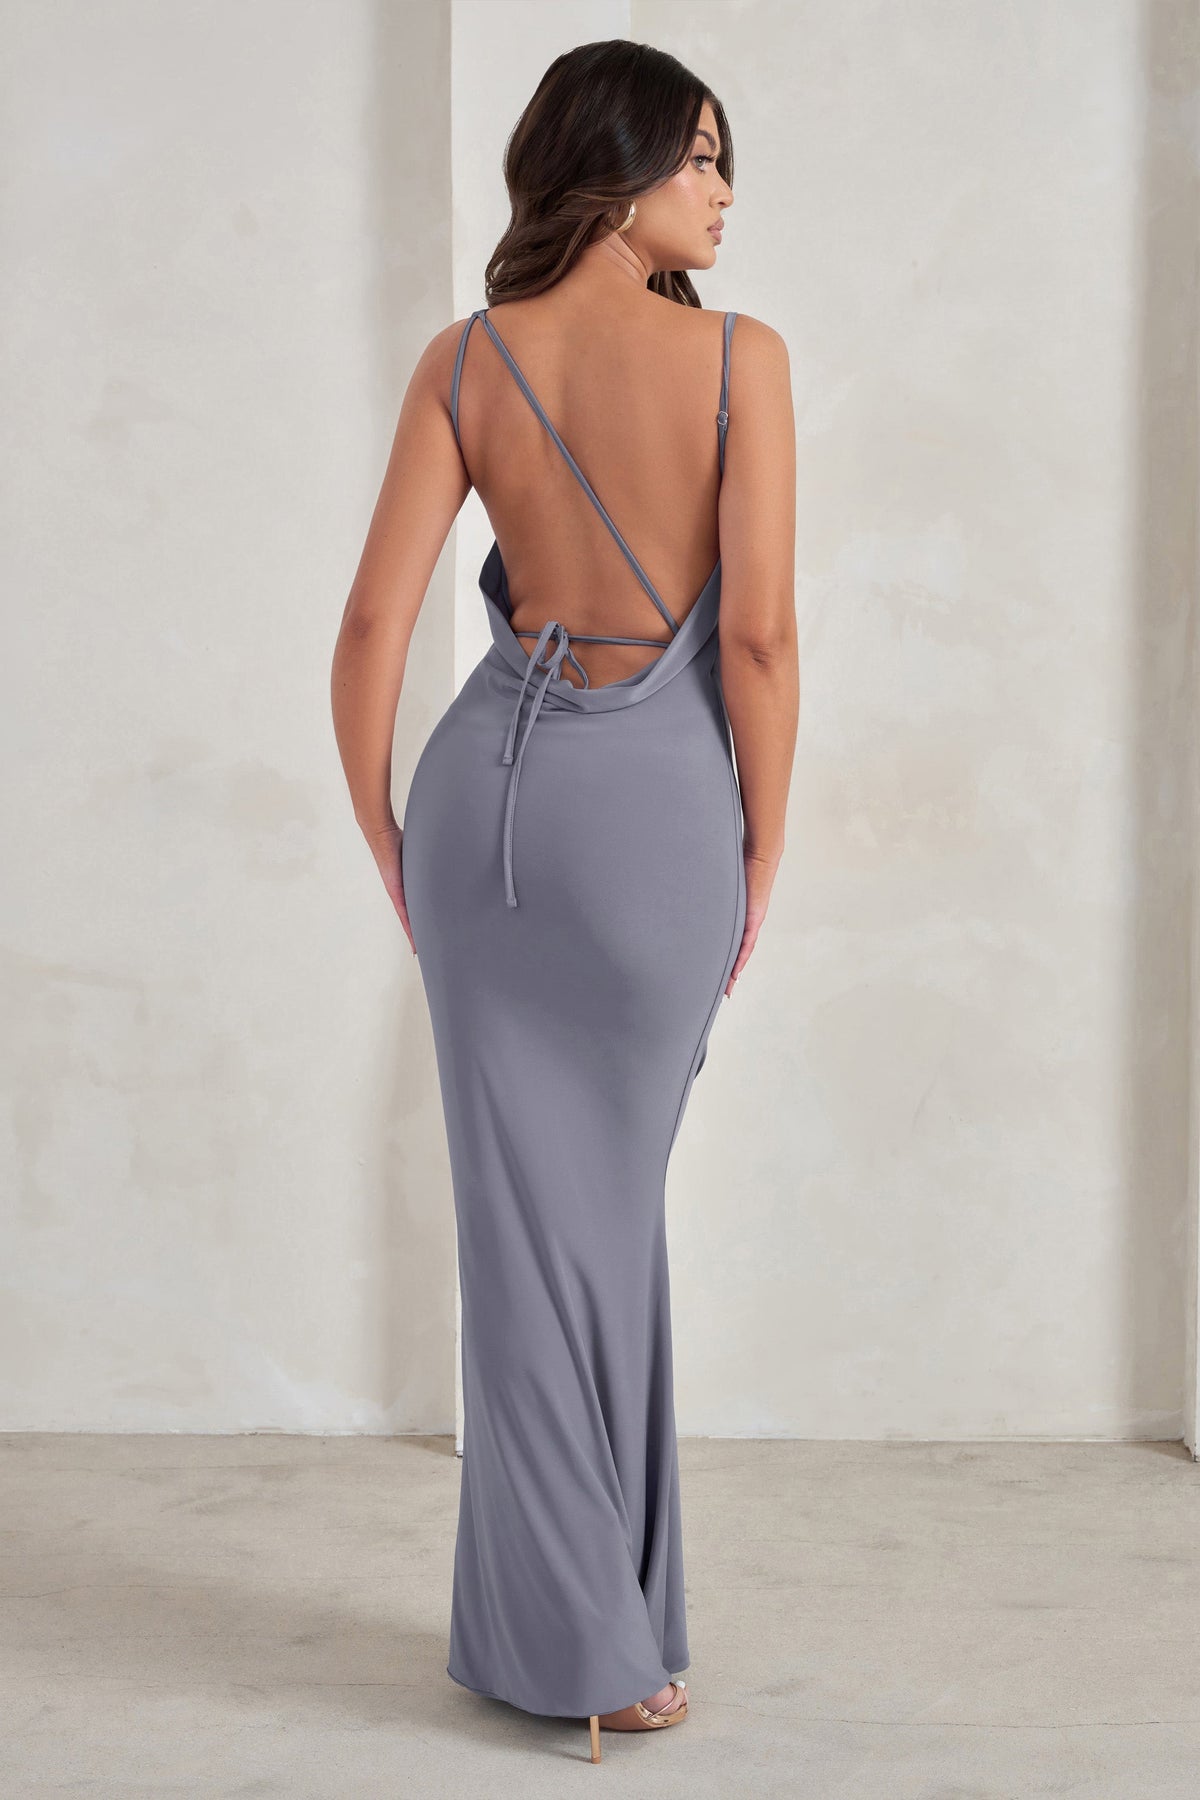 Corinne Grey Asymmetric Cowl Neck Backless Maxi Dress – Club L